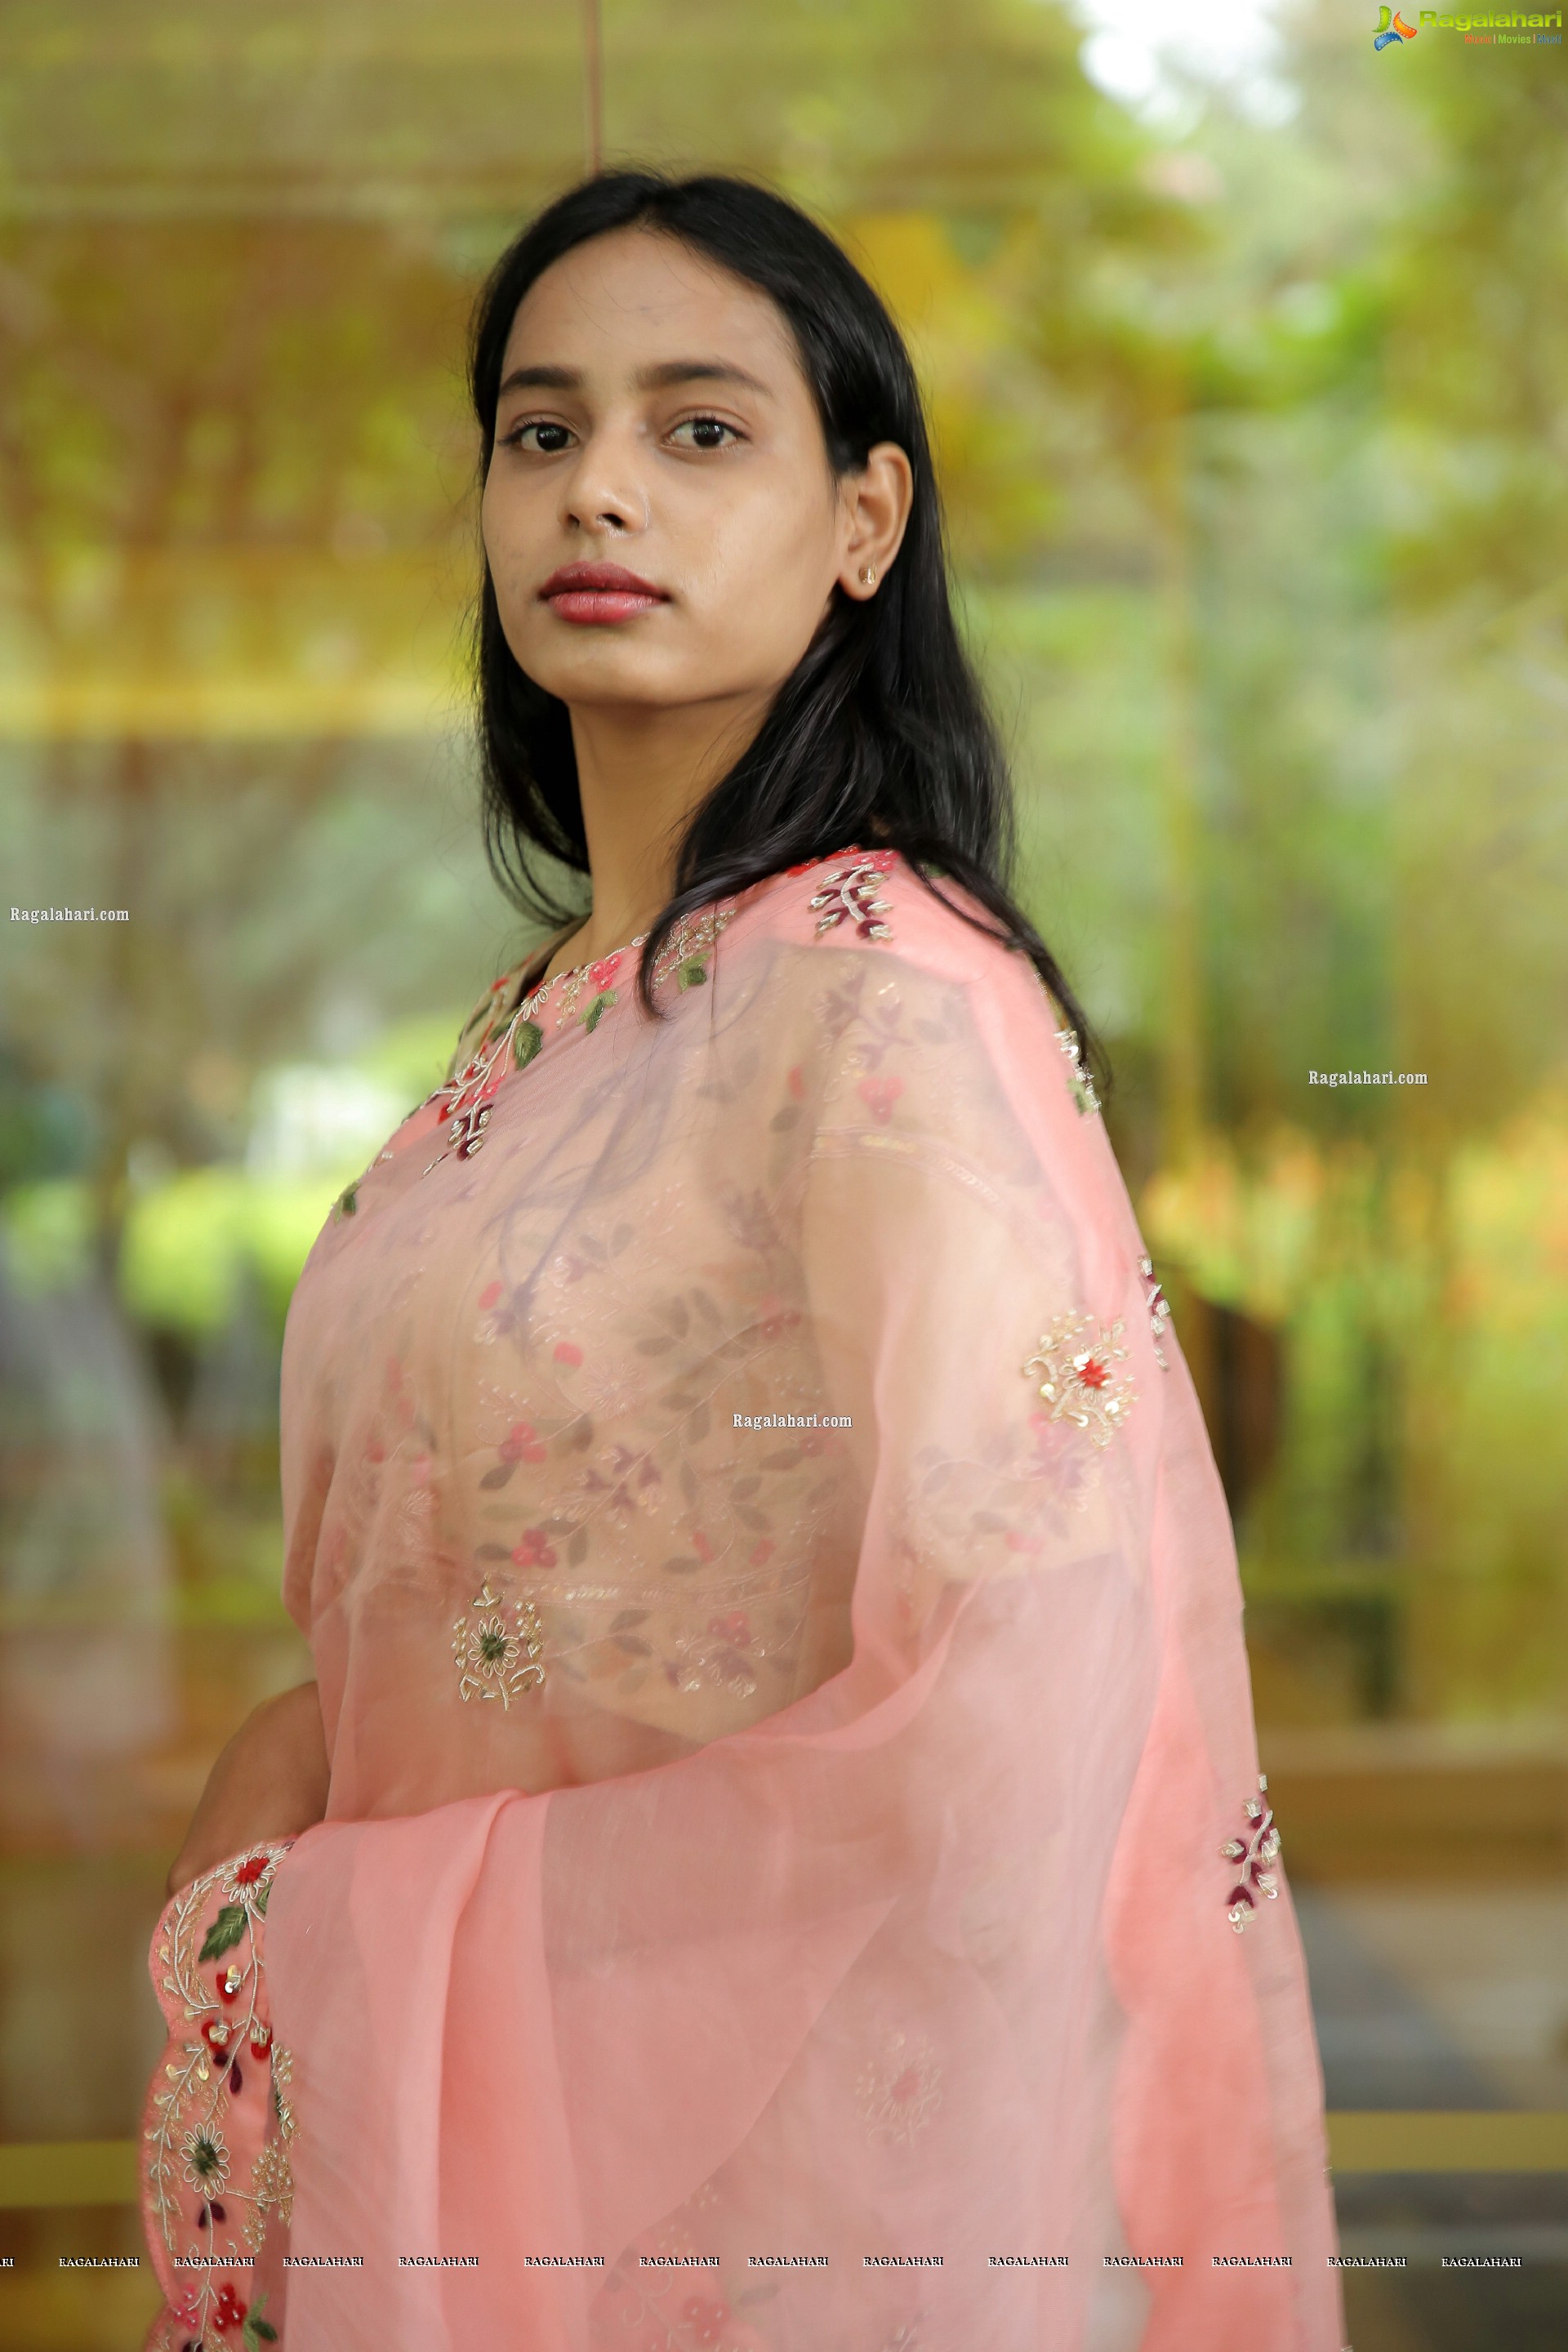 Model Farida in Designer Lehenga Choli, HD Photo Gallery